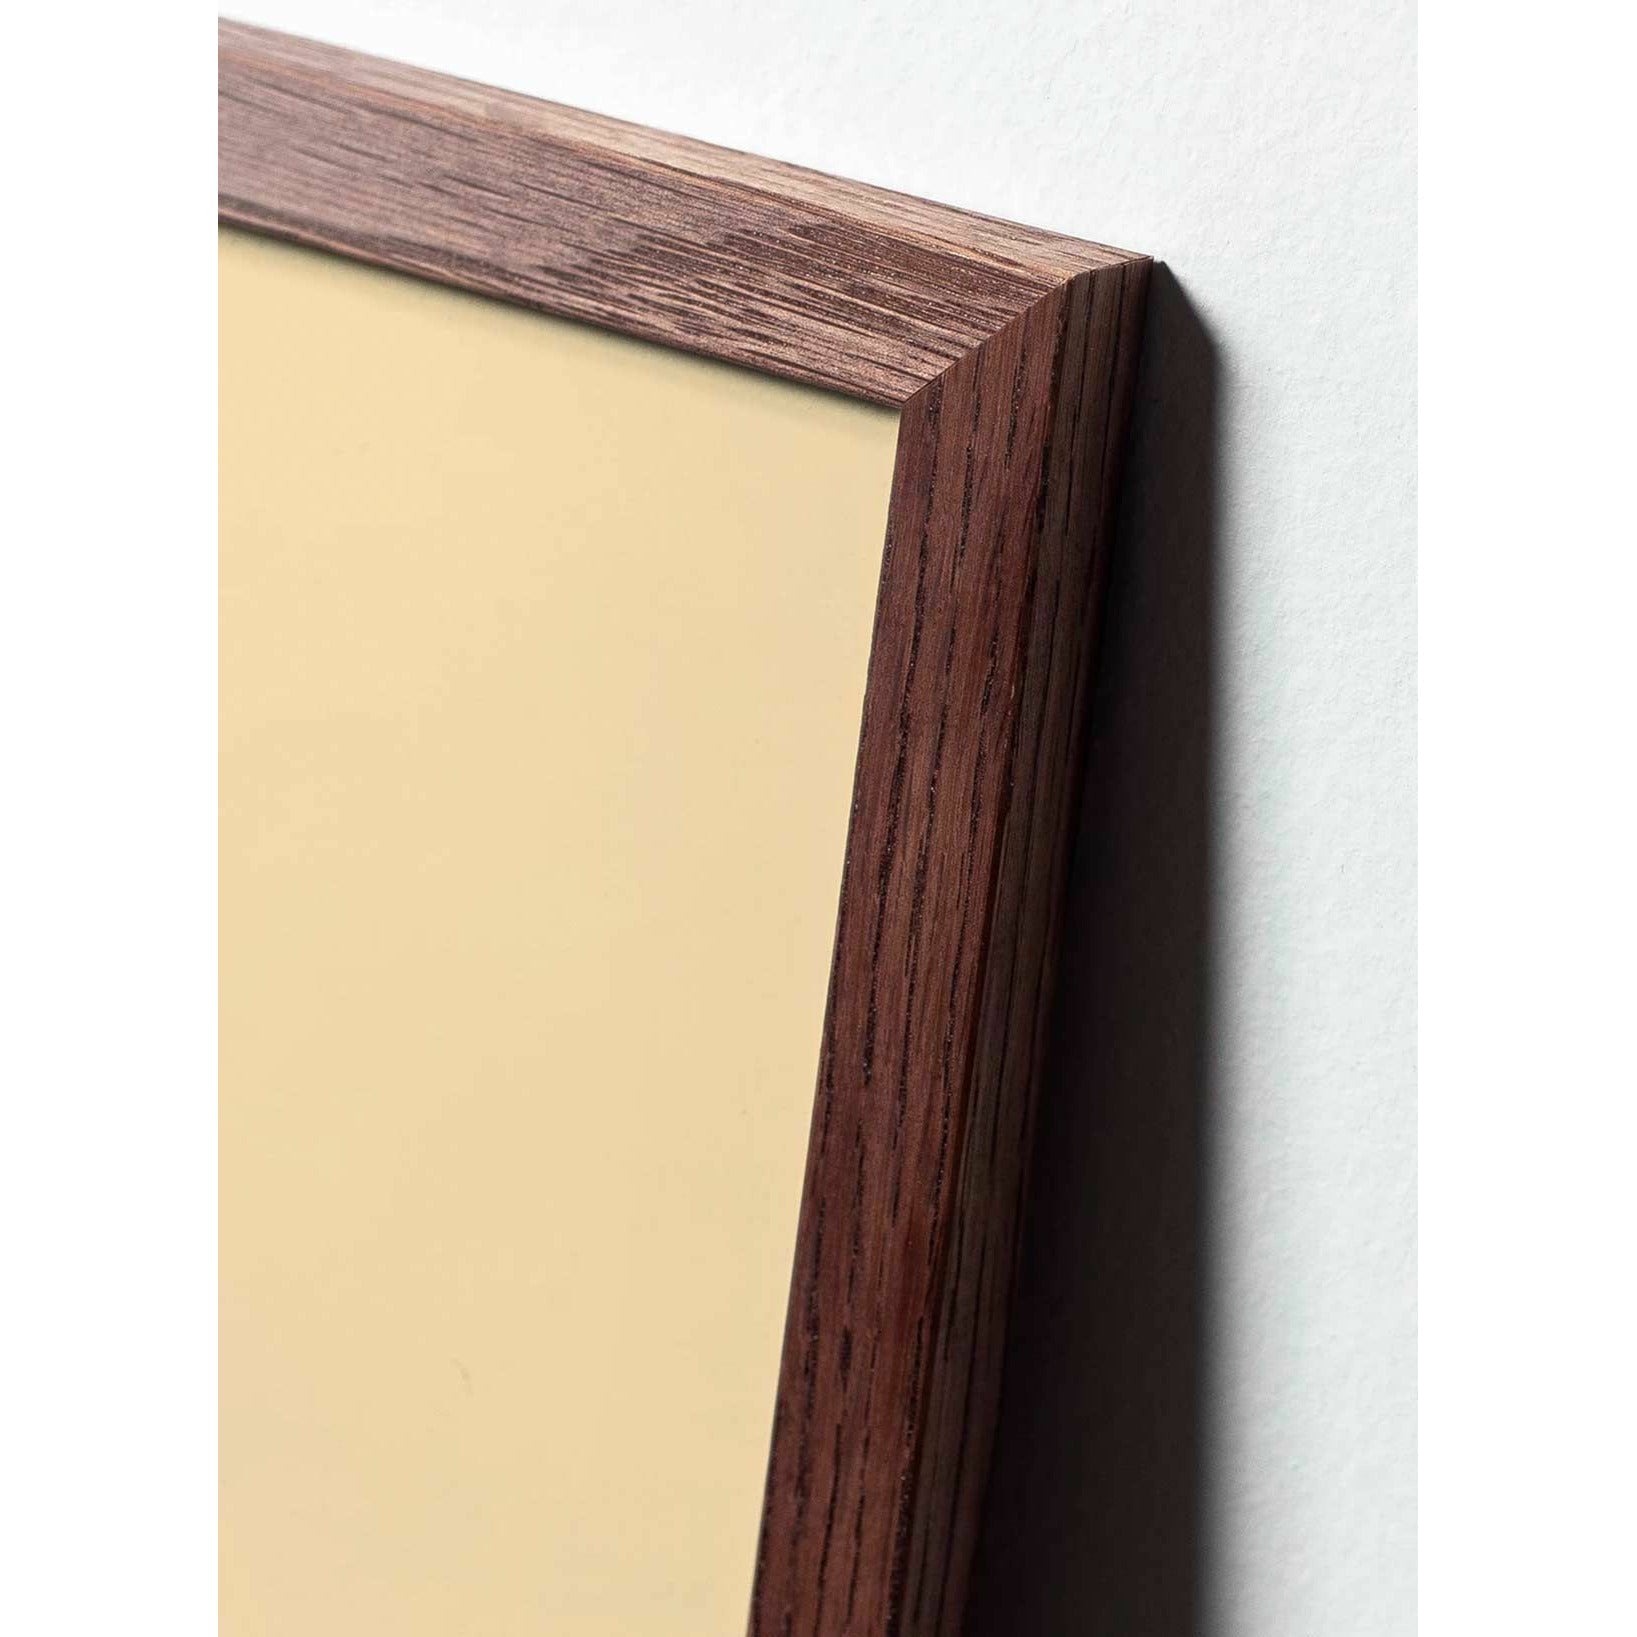 Póster clásico de Swan, marco hecho de madera oscura de 30x40 cm, fondo blanco/blanco